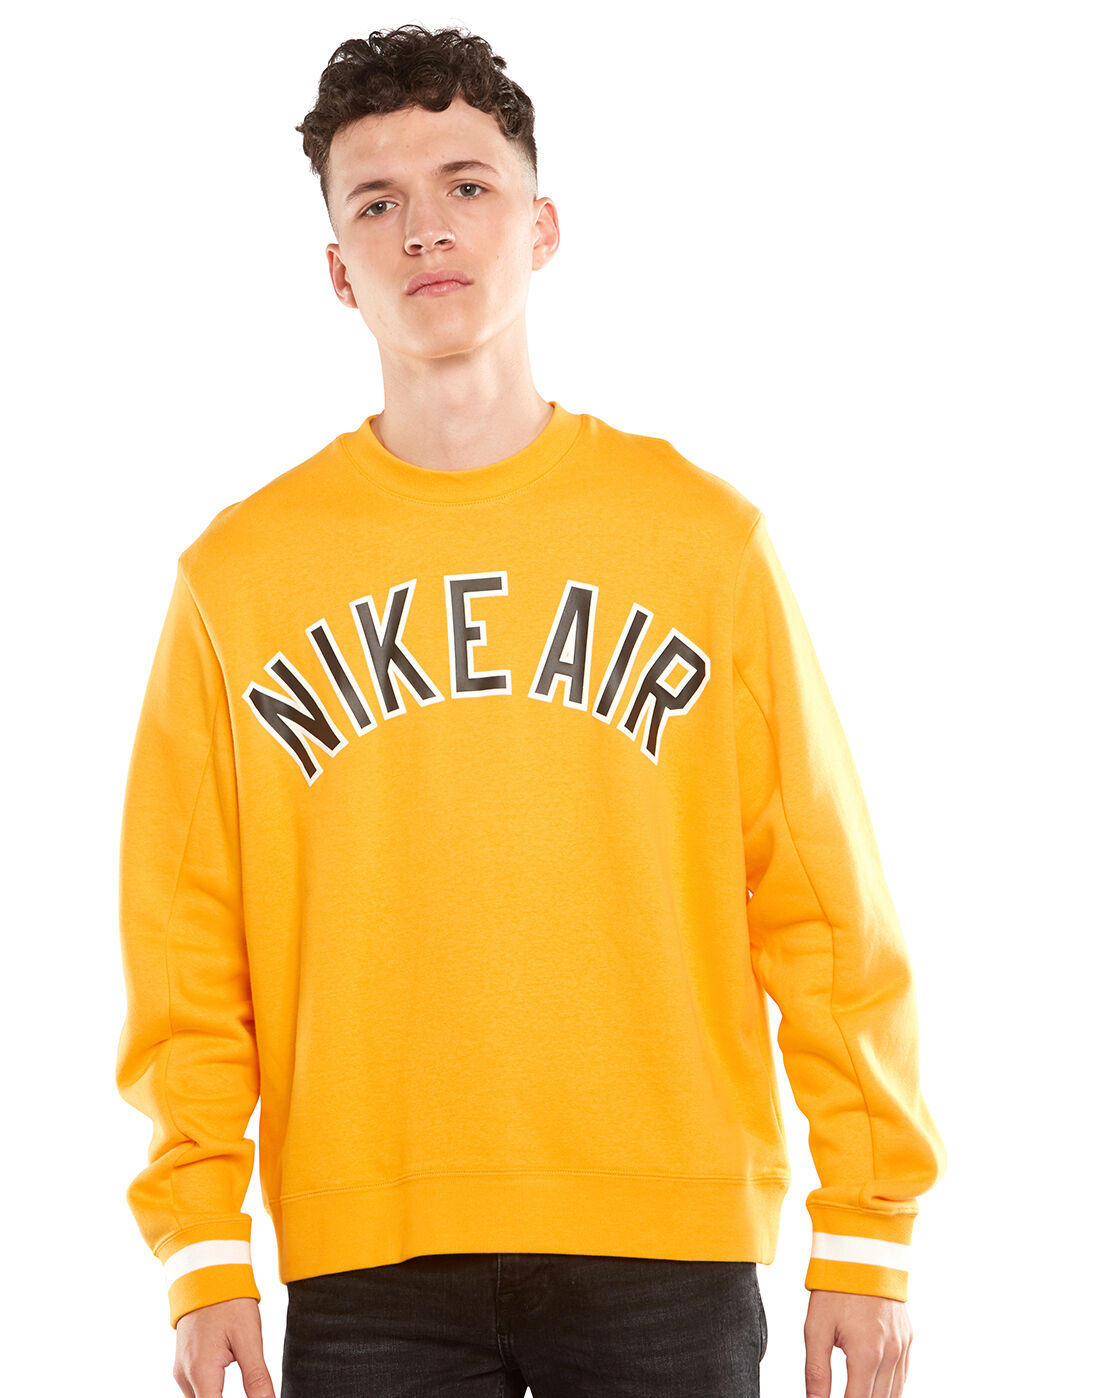 yellow nike air jumper